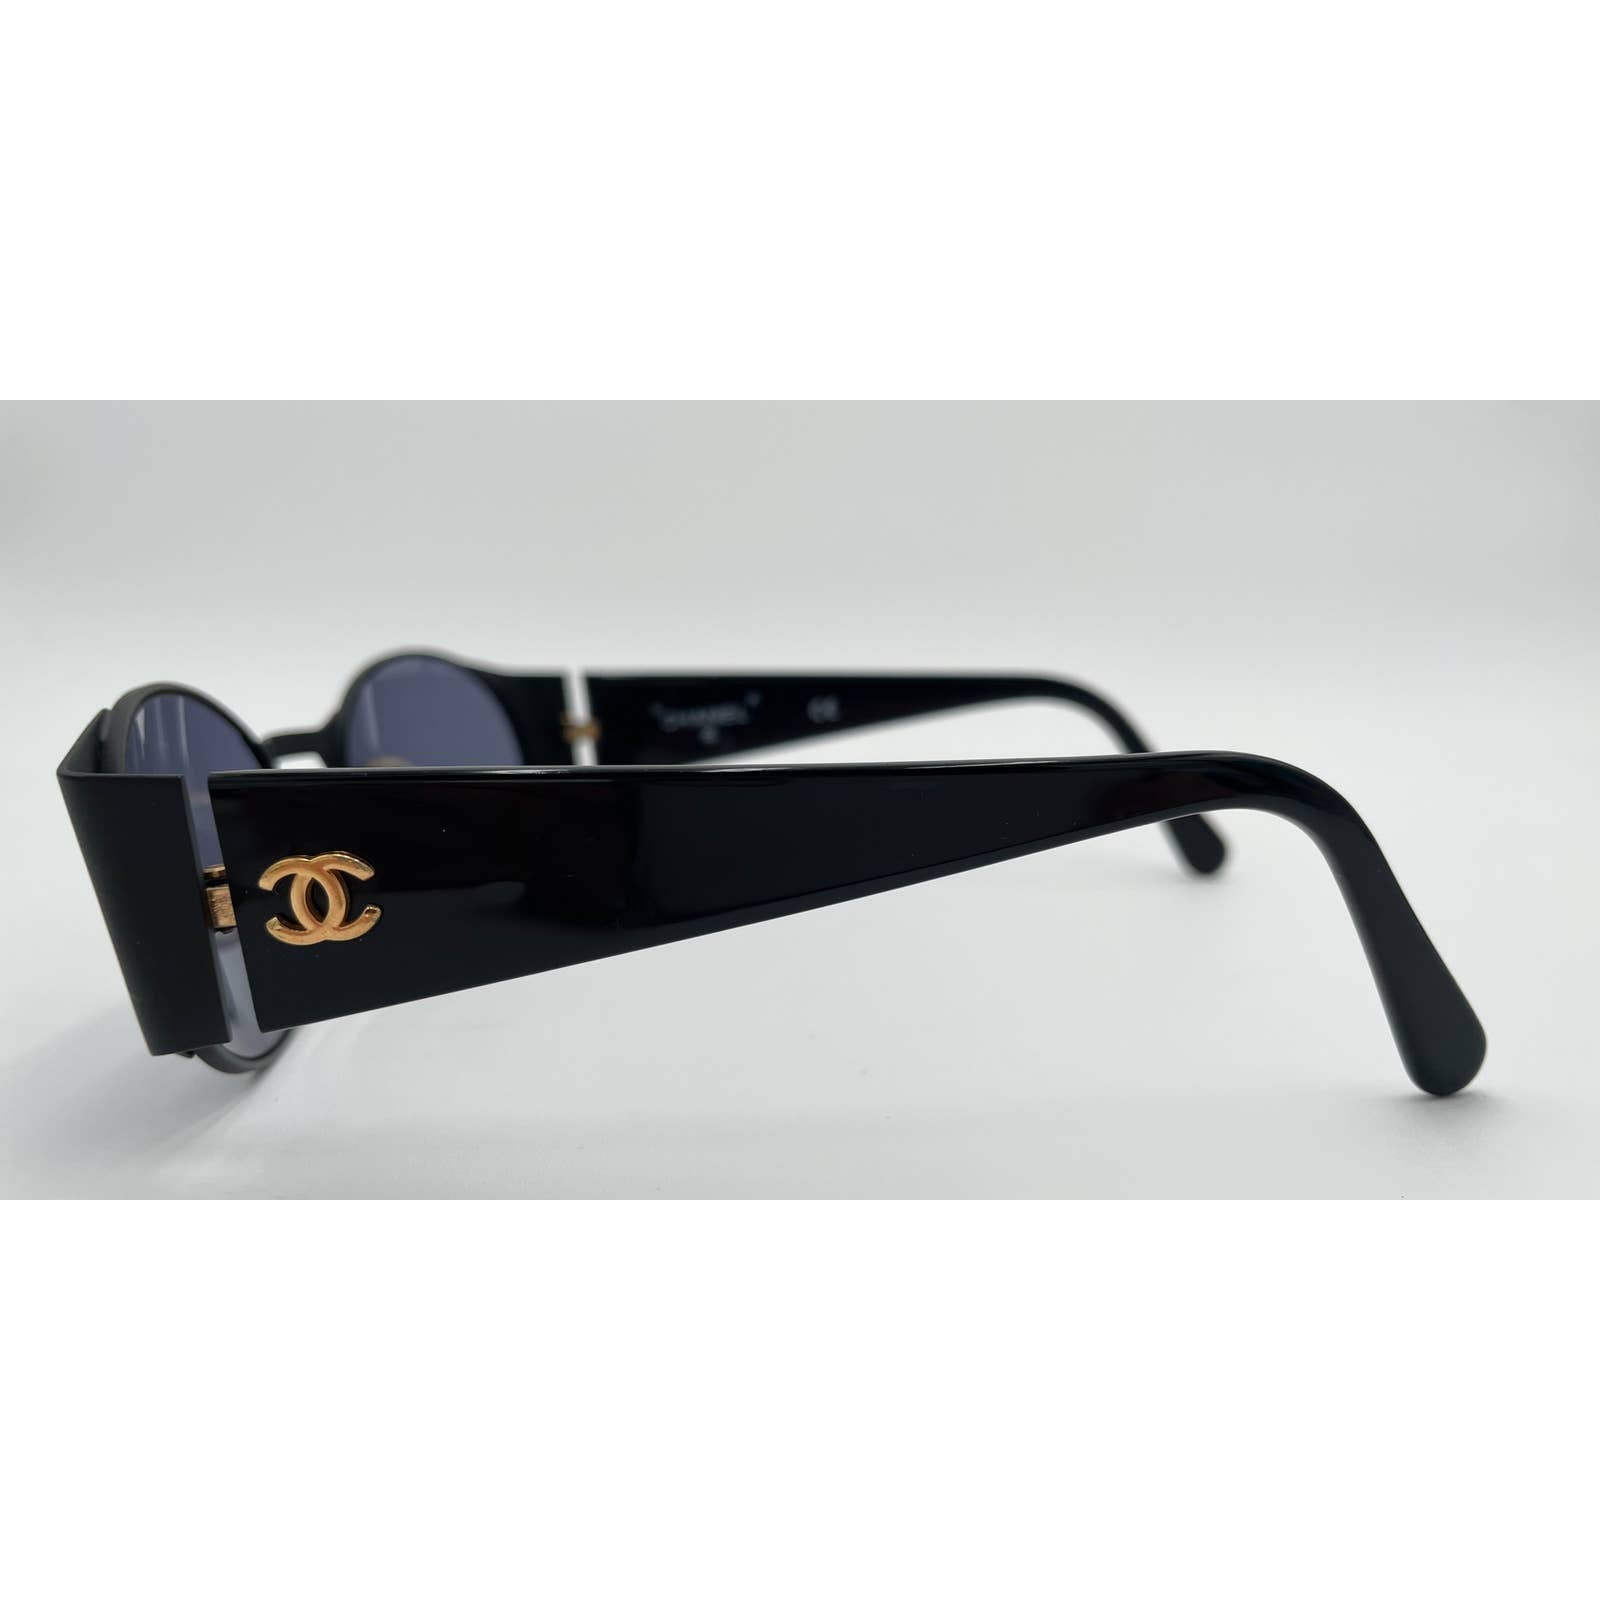 Chanel Black Oval 90s Sunglasses - Le Look